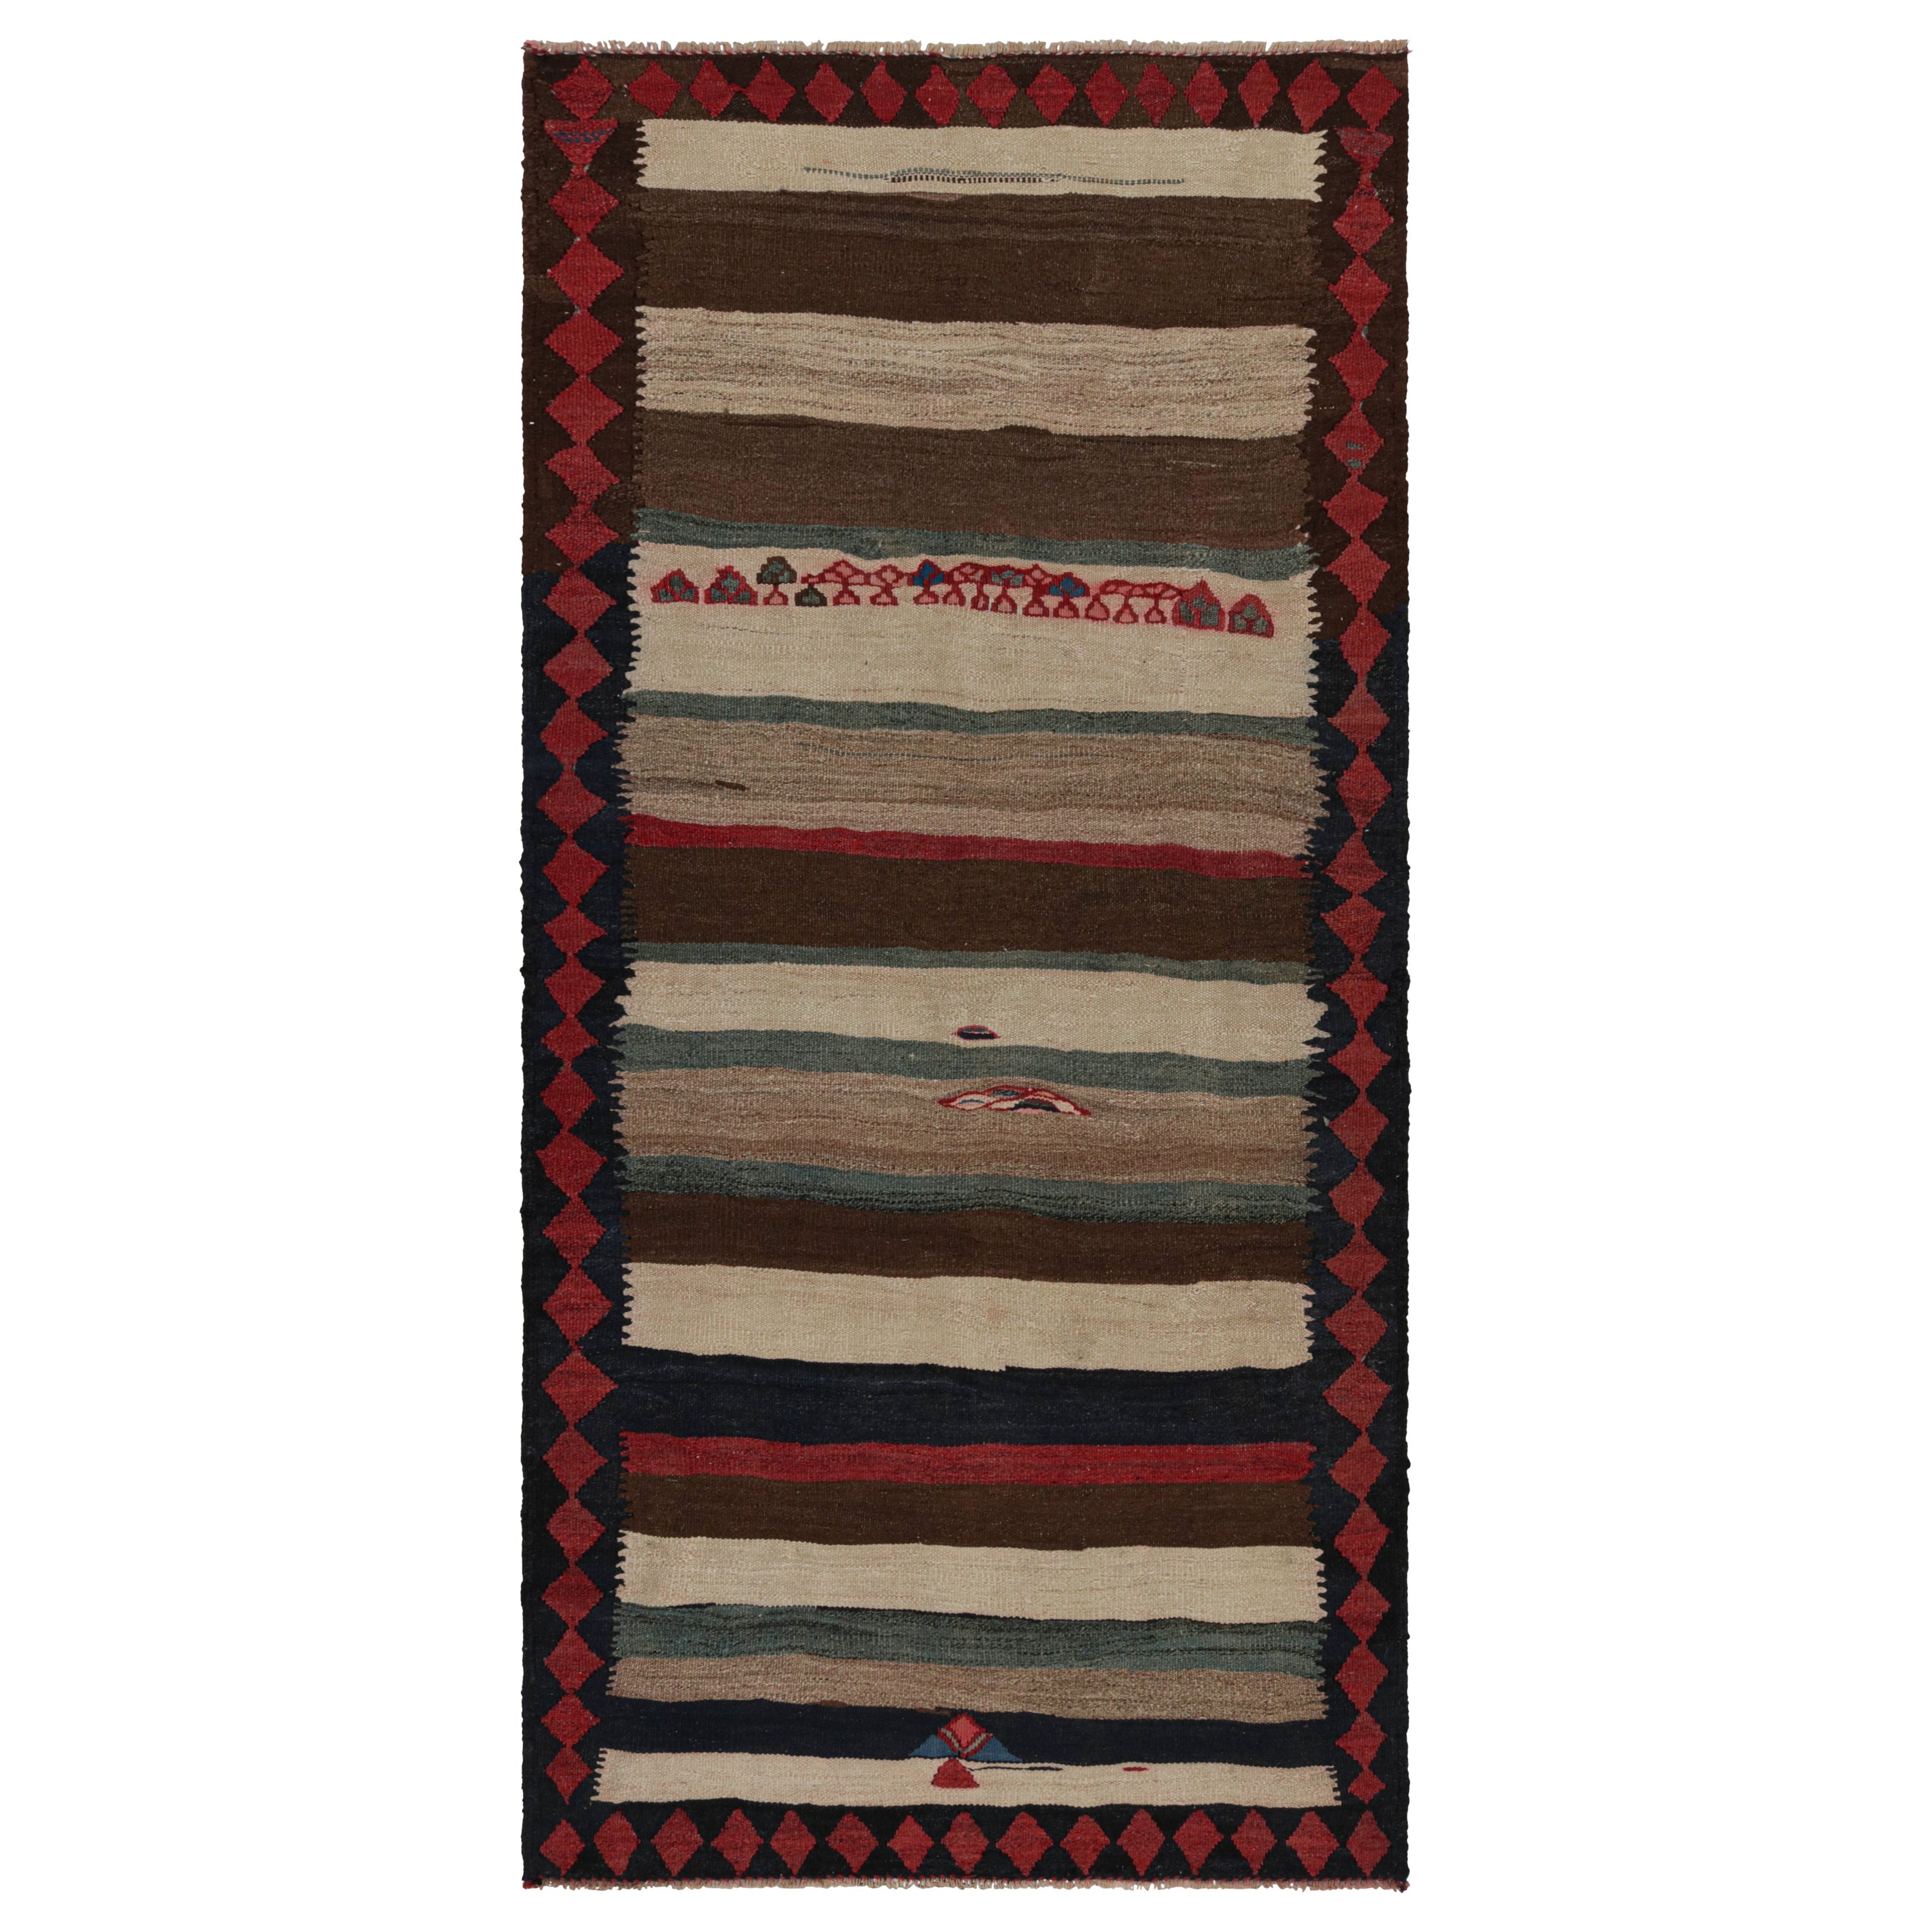 Vintage Shahsavan Persian tribal Kilim rug, with Stripes, from Rug & Kilim For Sale